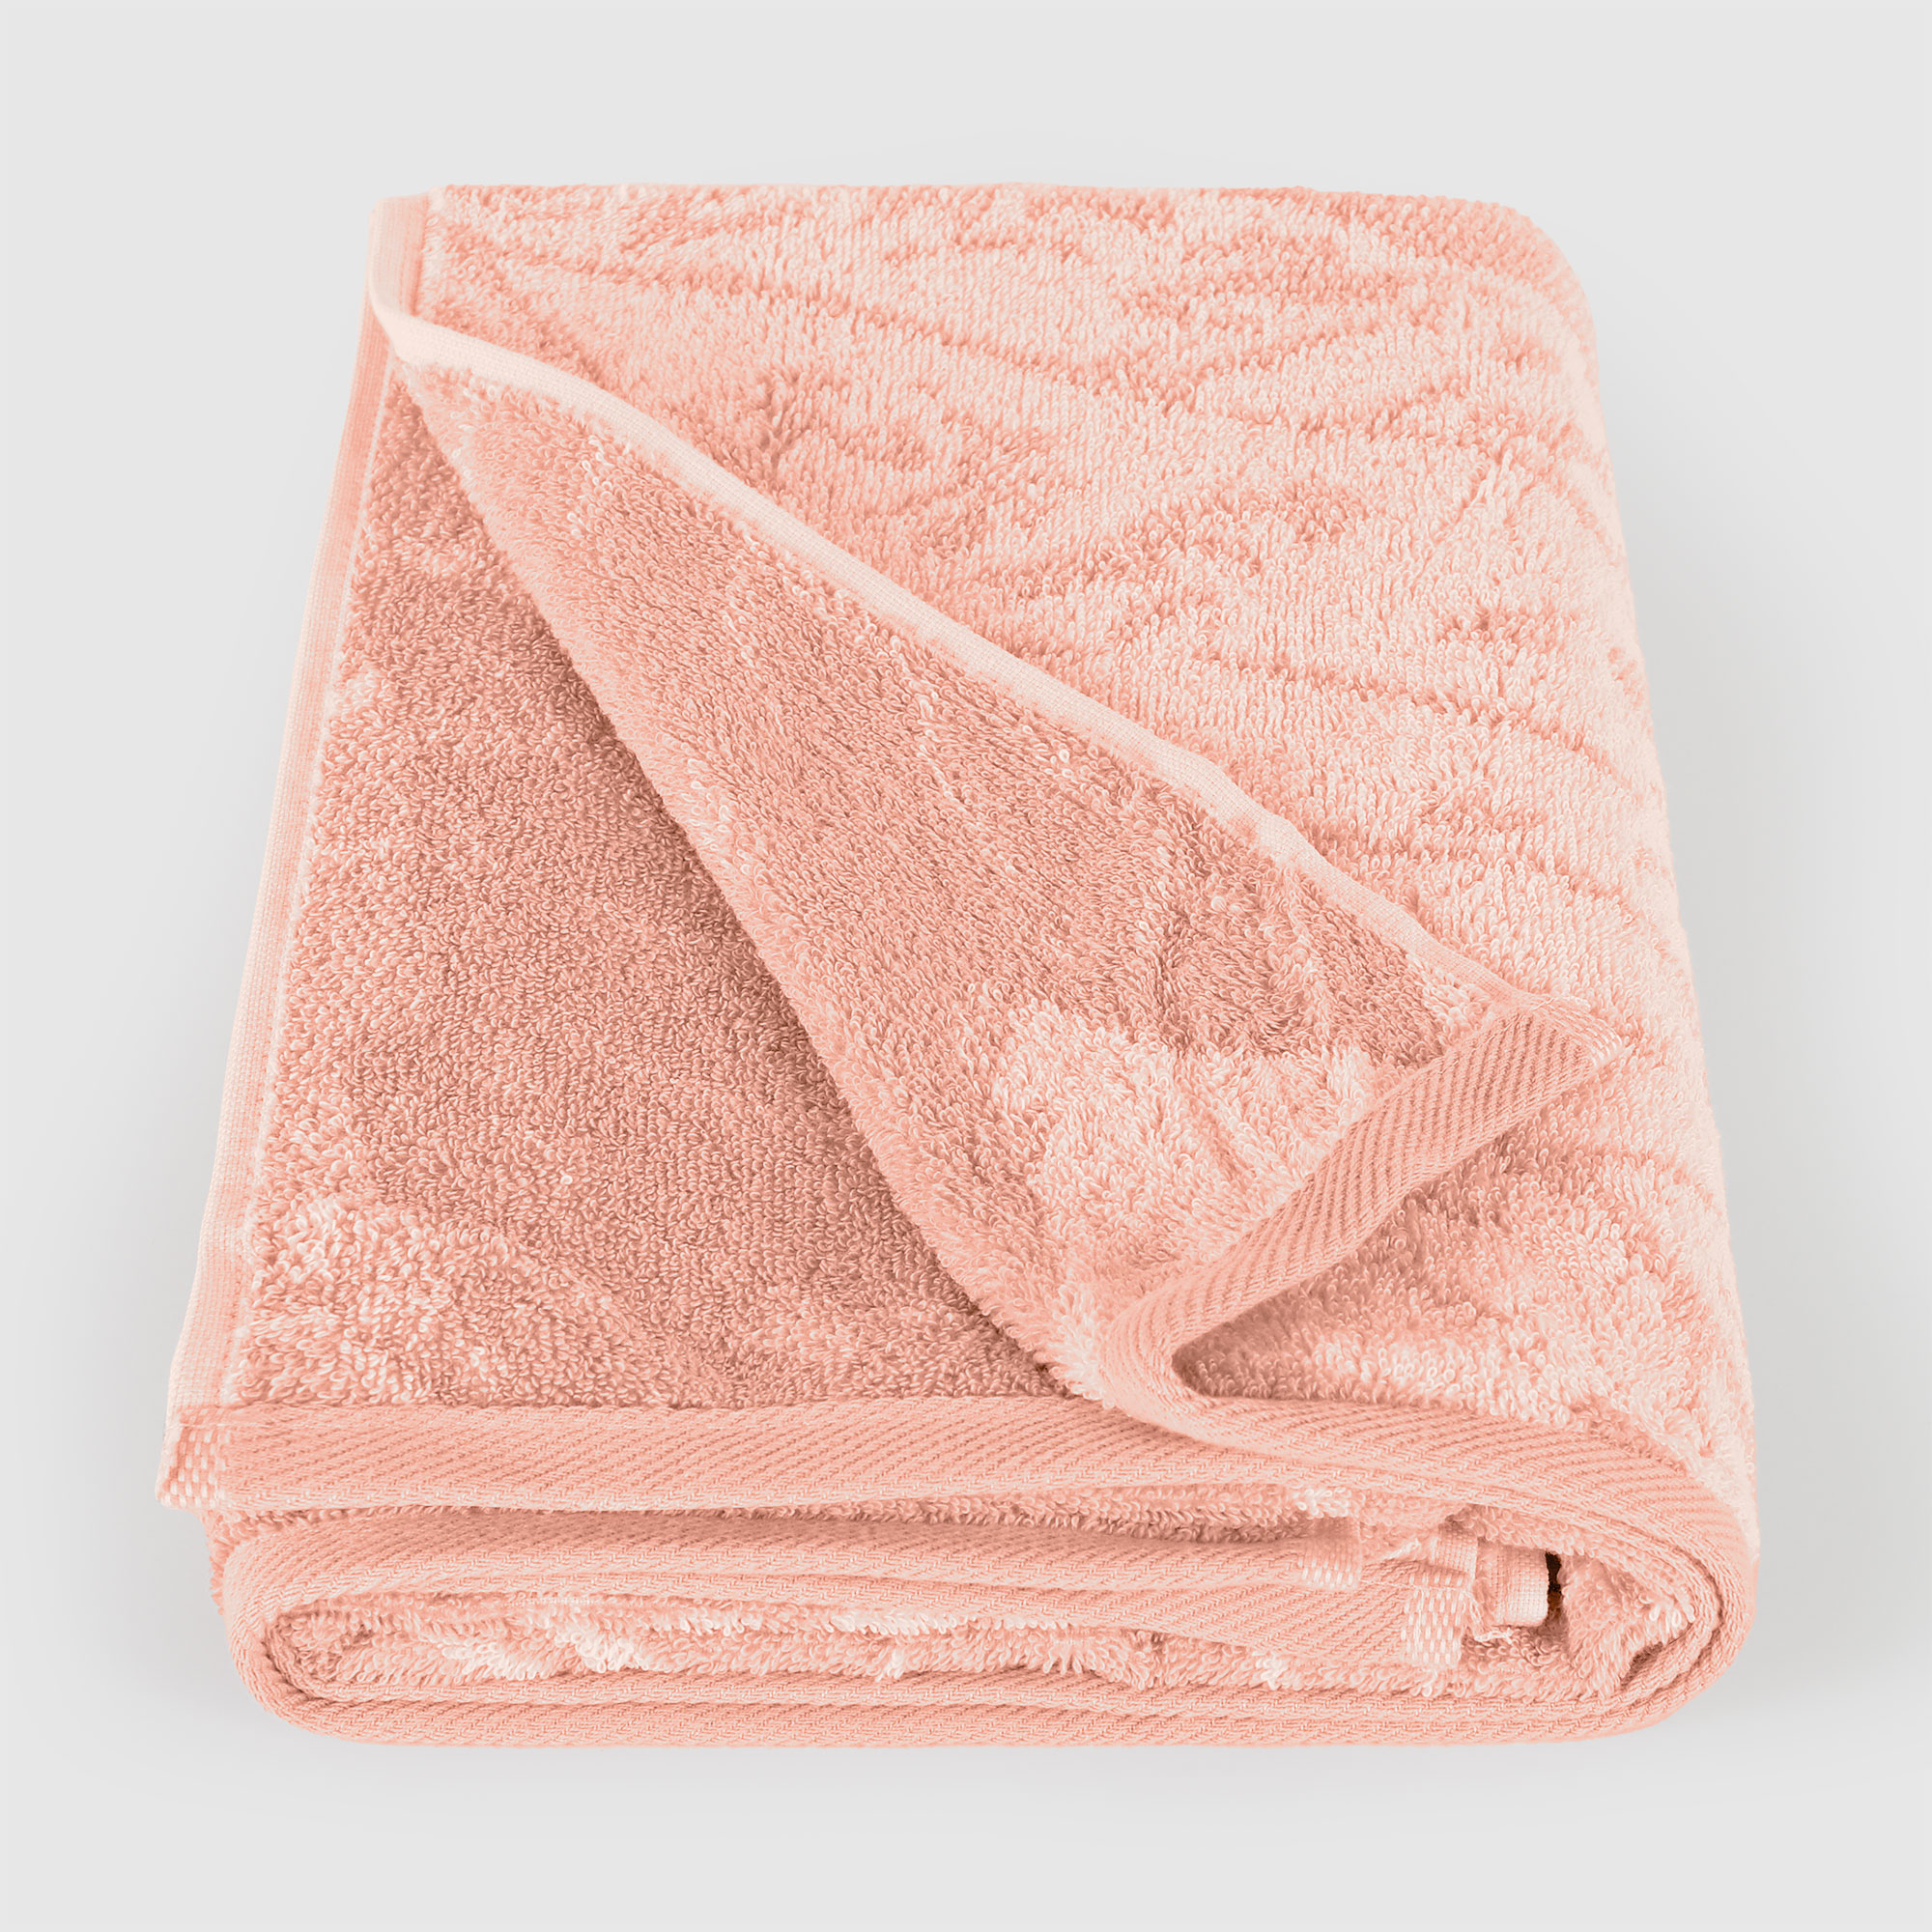 Где купить Полотенце Cleanelly Autumn Forest розовое с белым 70х130 см Cleanelly 